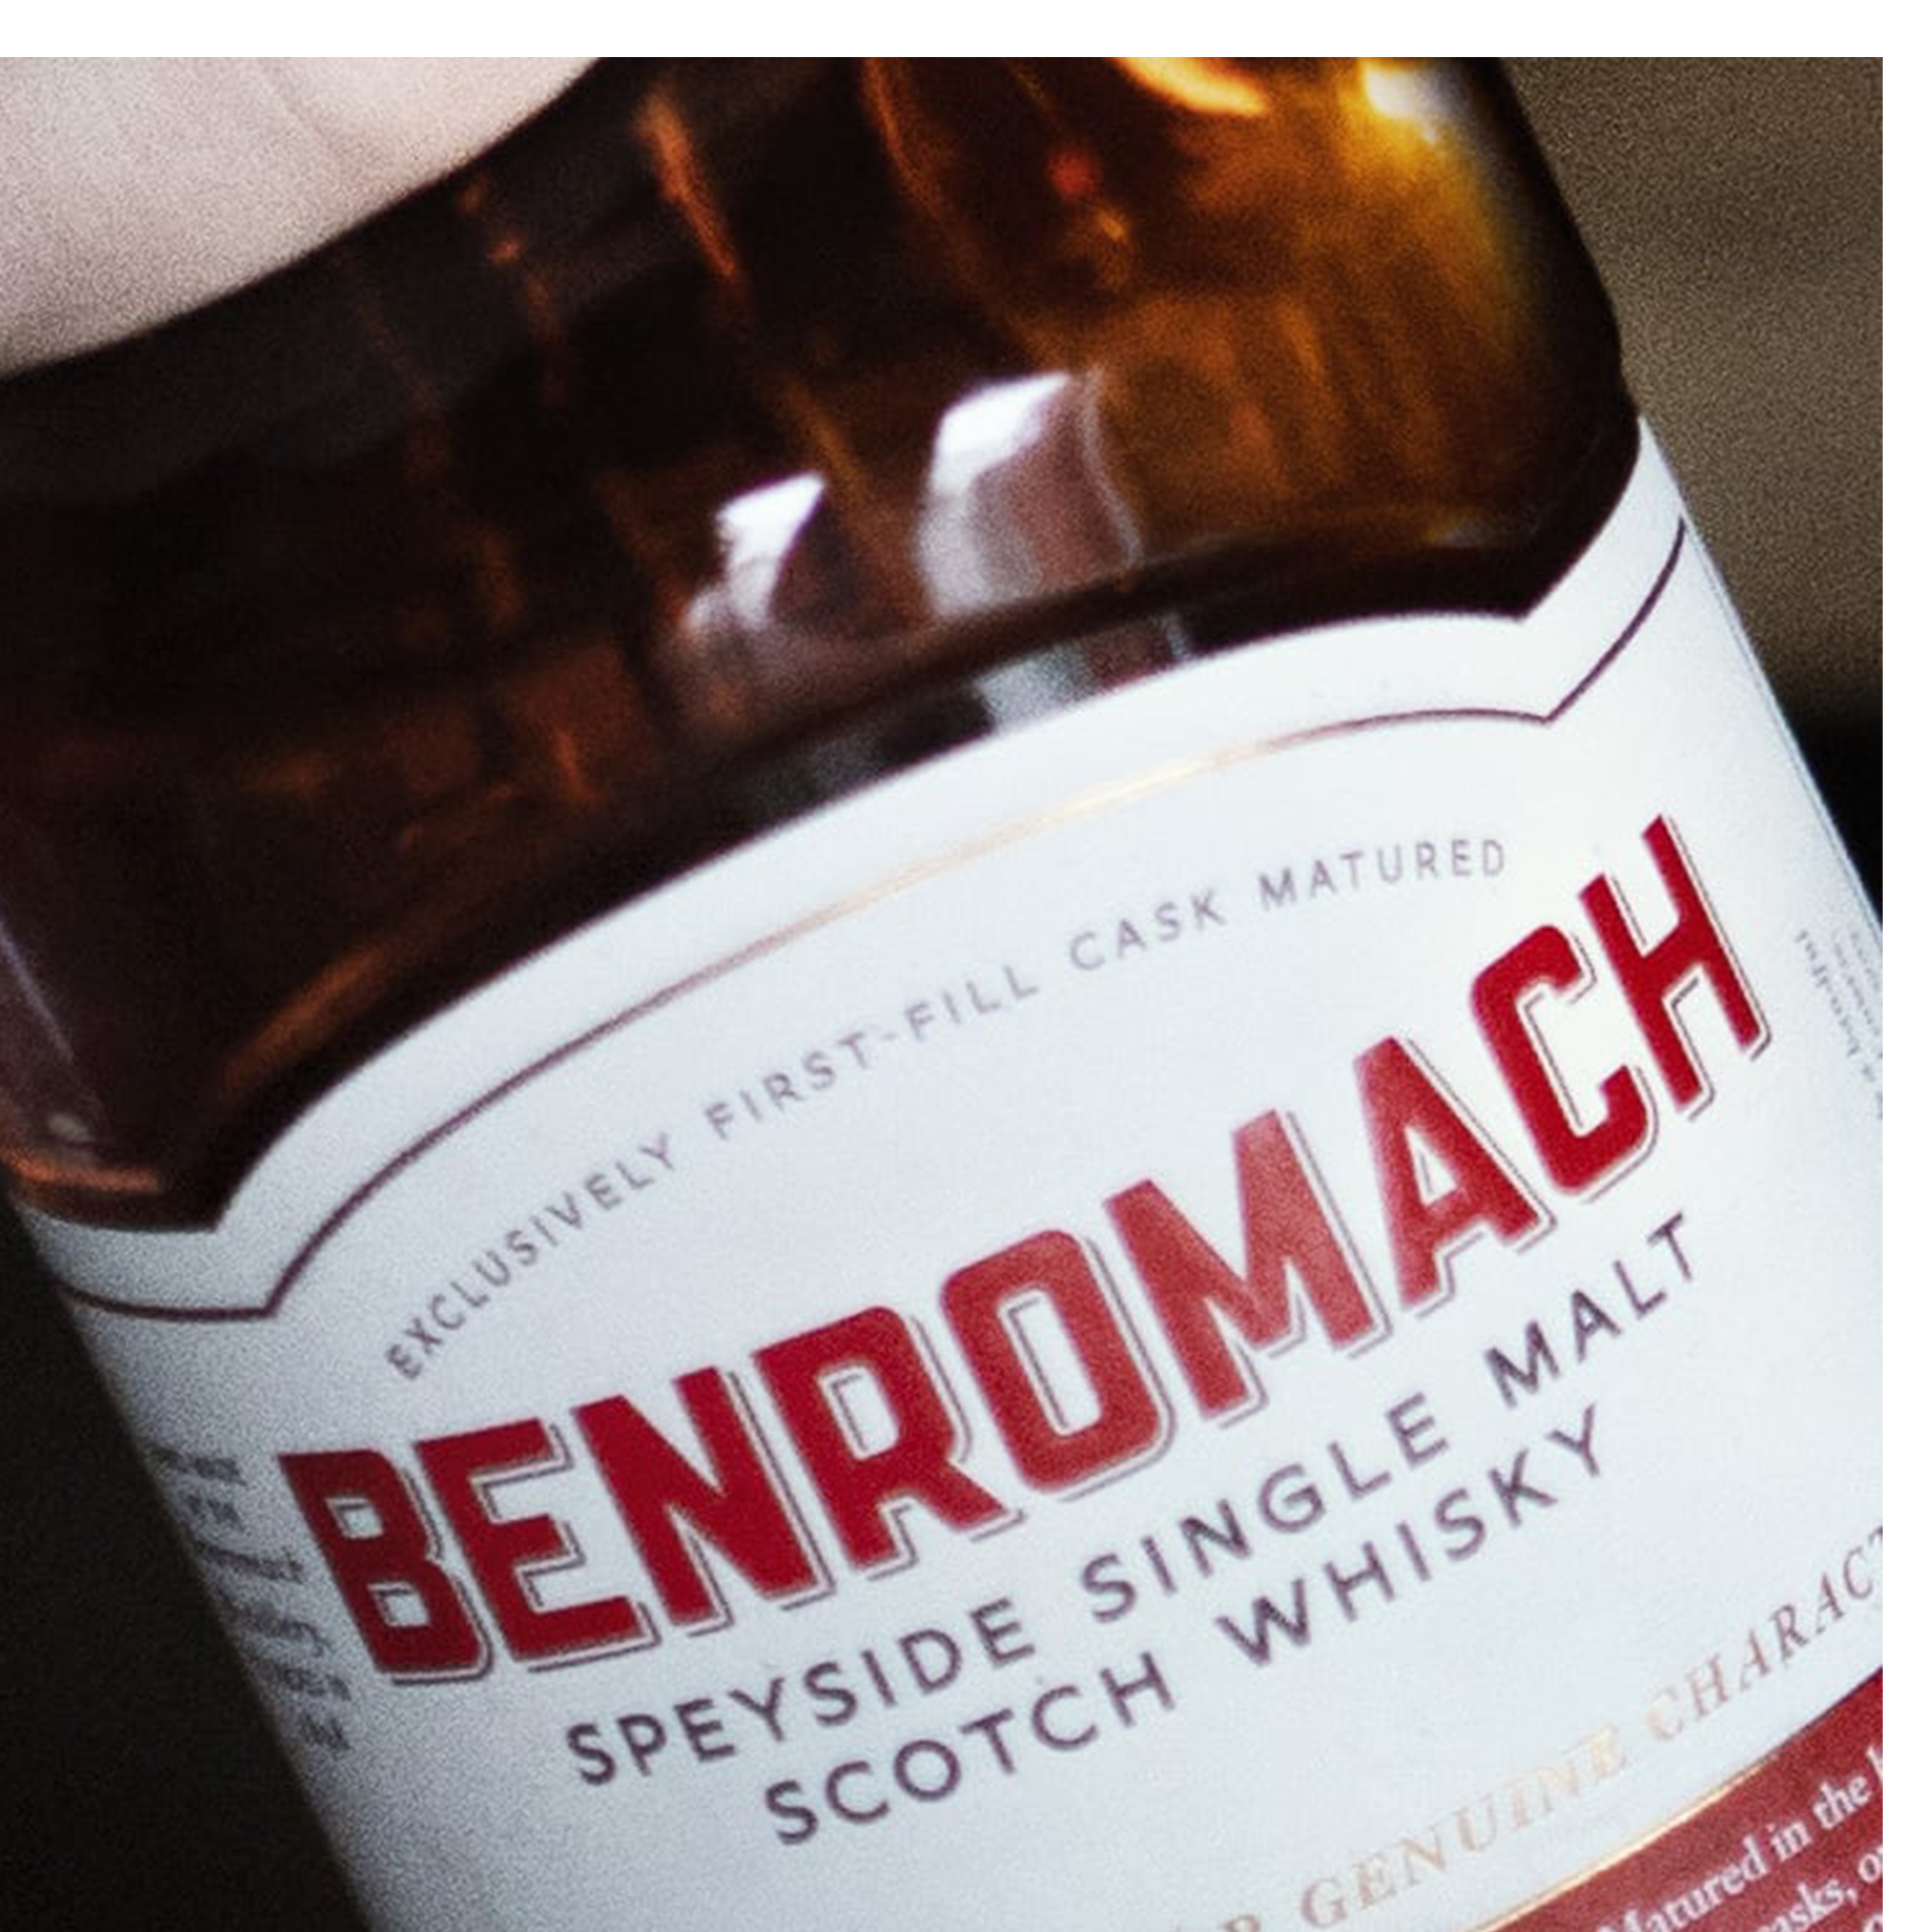 Benromach 15 Year Single Malt Scotch